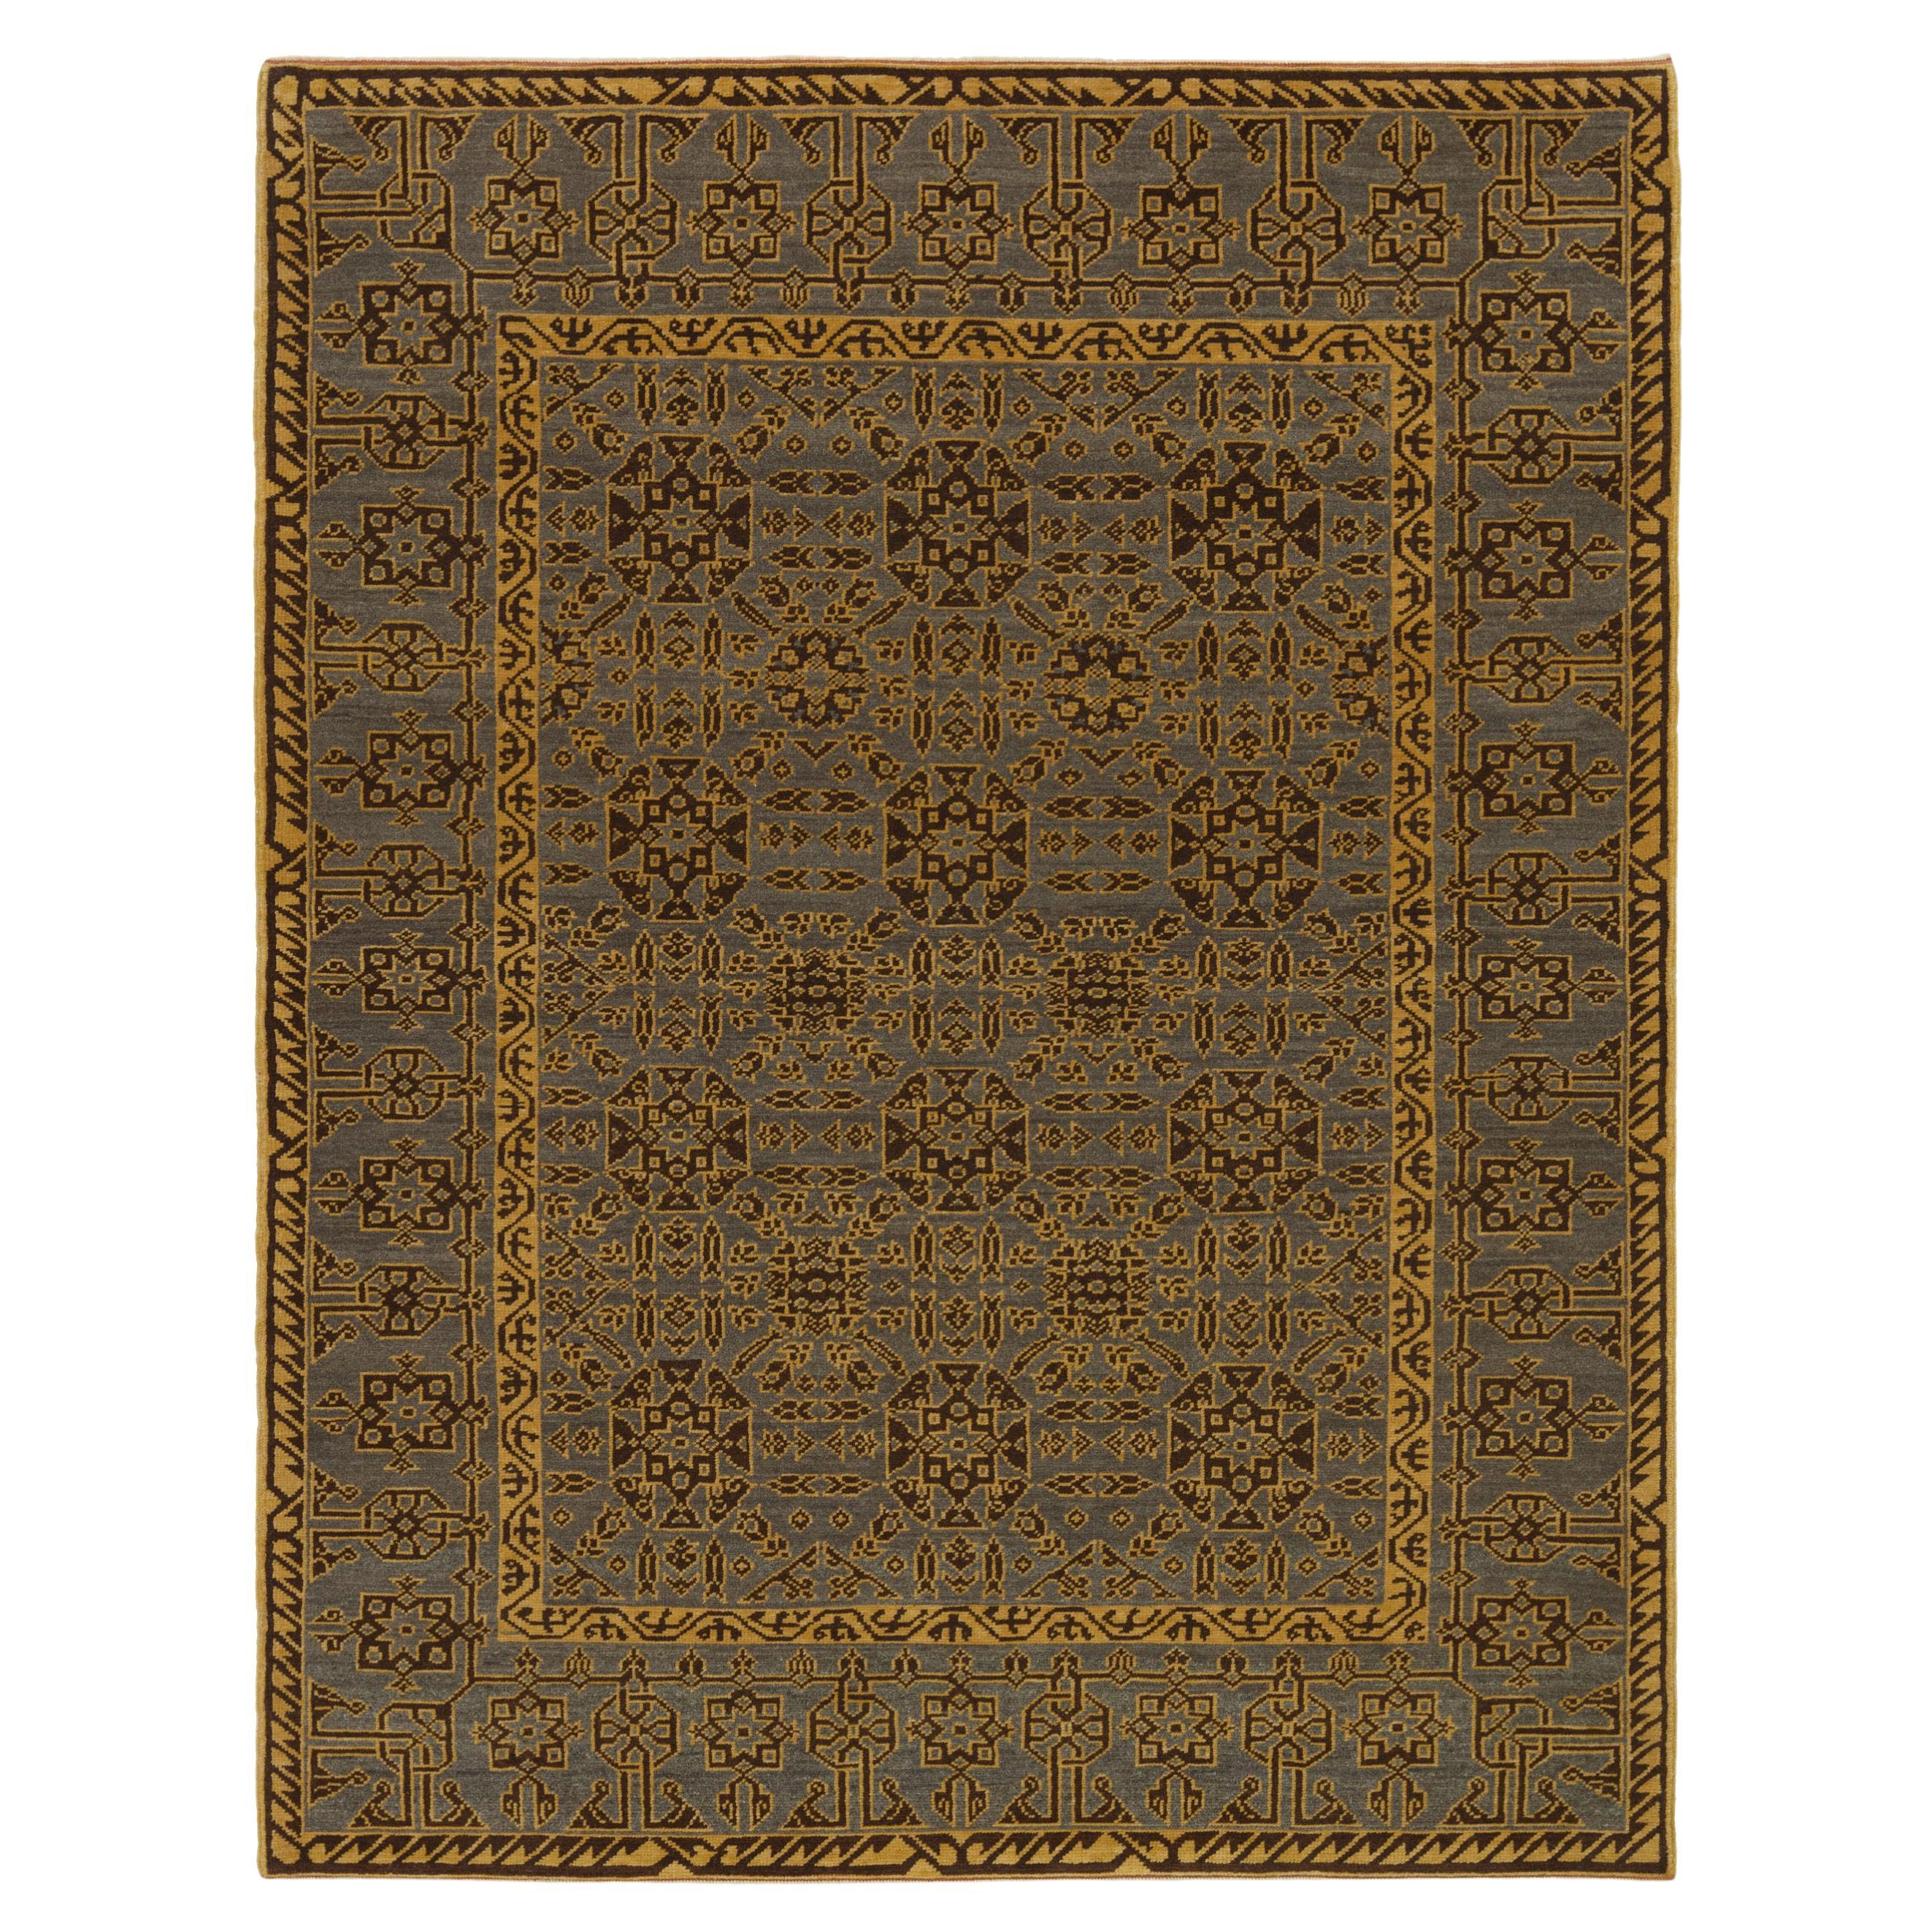 Ararat Rugs The Divrigi Ulu Mosque Carpet Anatolian Revival Rug, Natural Dye en vente